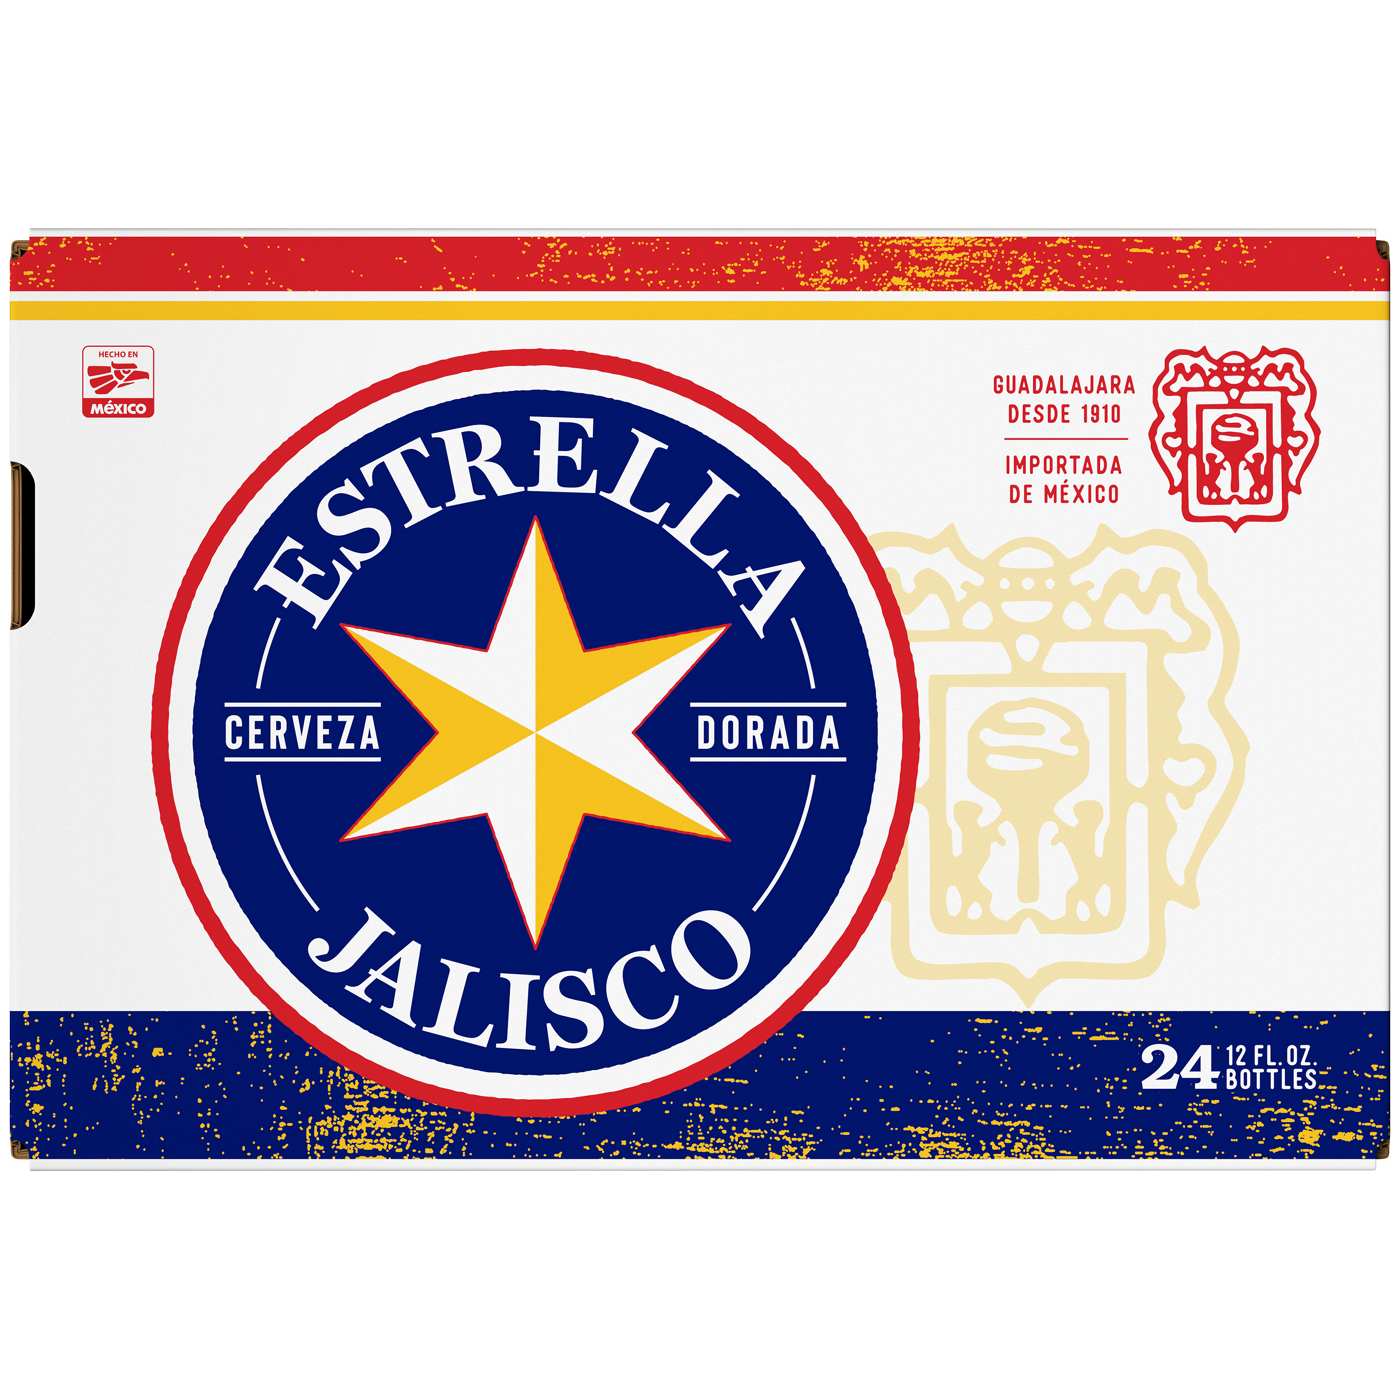 Estrella Jalisco Beer 24 pk Bottles; image 2 of 2